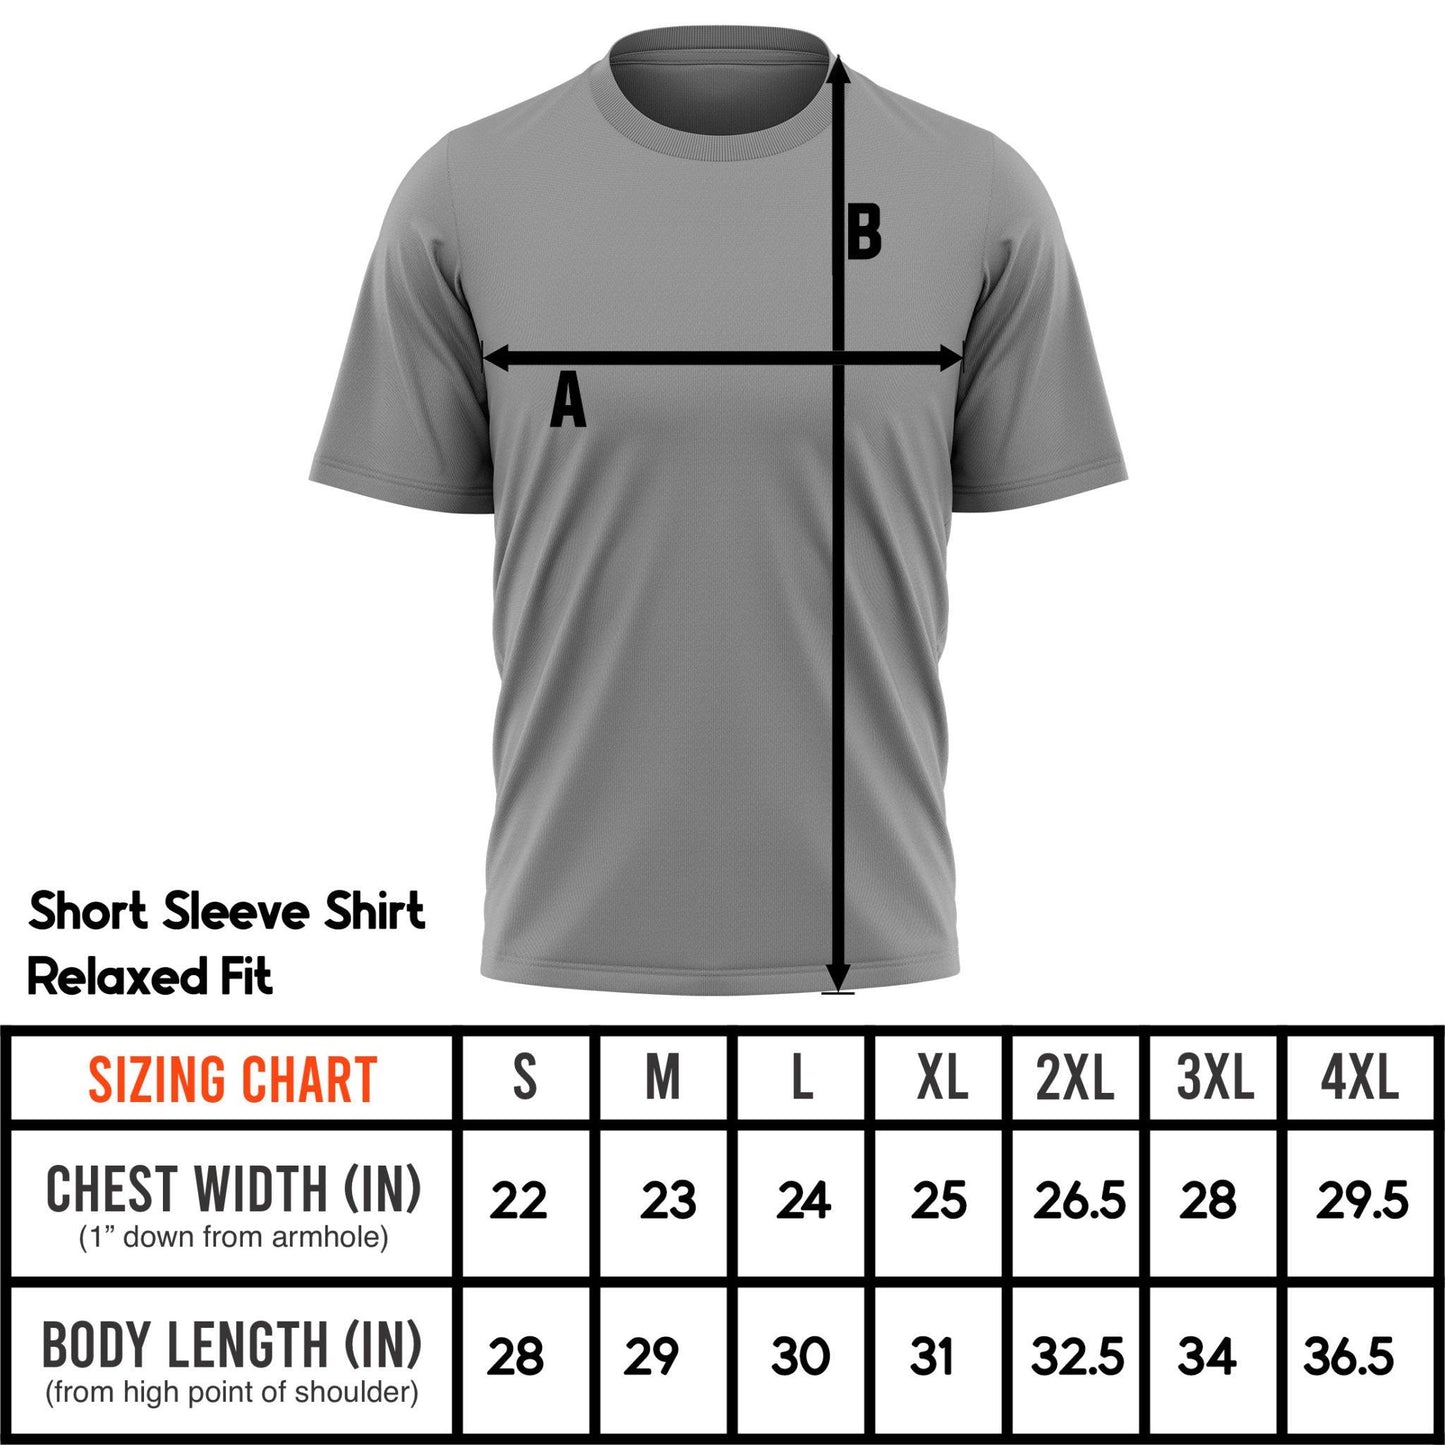 Anarchy Bat Company Short Sleeve Shirt - Dots (Green/Black) - Smash It Sports